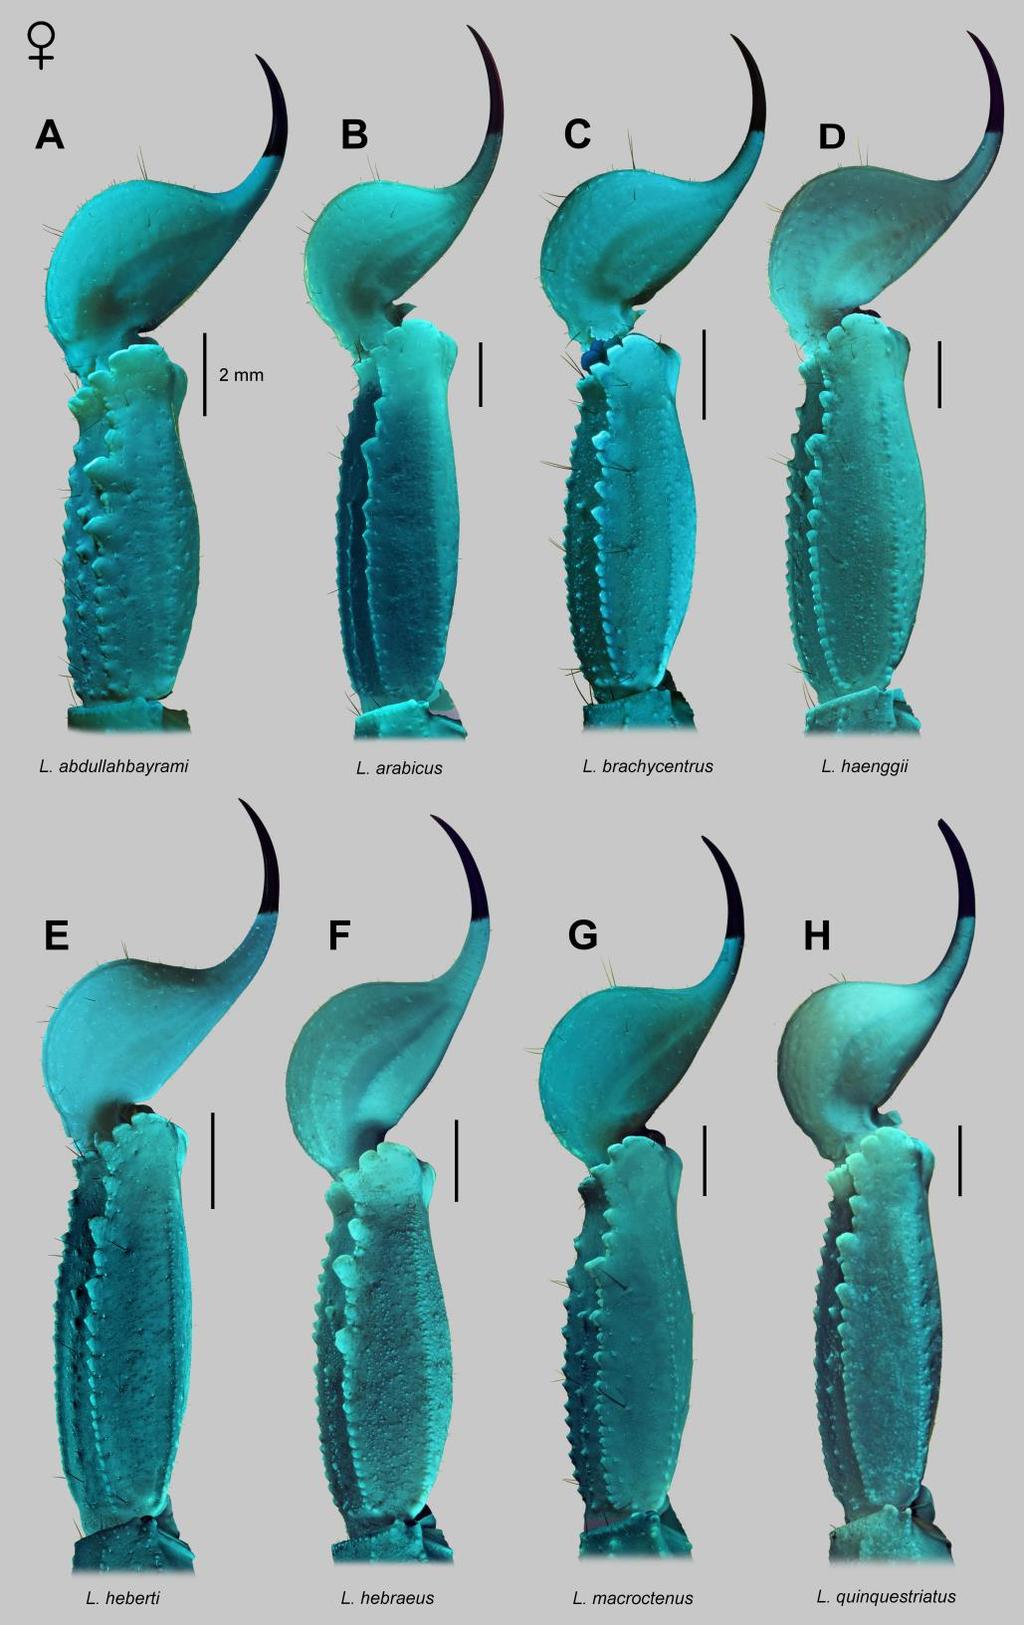 108 Euscorpius 2014, No. 191 Figure 89: Metasoma V and telson of Leiurus spp. Females, lateral aspect. A. L. abdullahbayrami Yağmur, Koç et Kunt, 2009. B. L. arabicus sp. n. C. L. brachycentrus (Ehrenberg, 1829) stat.